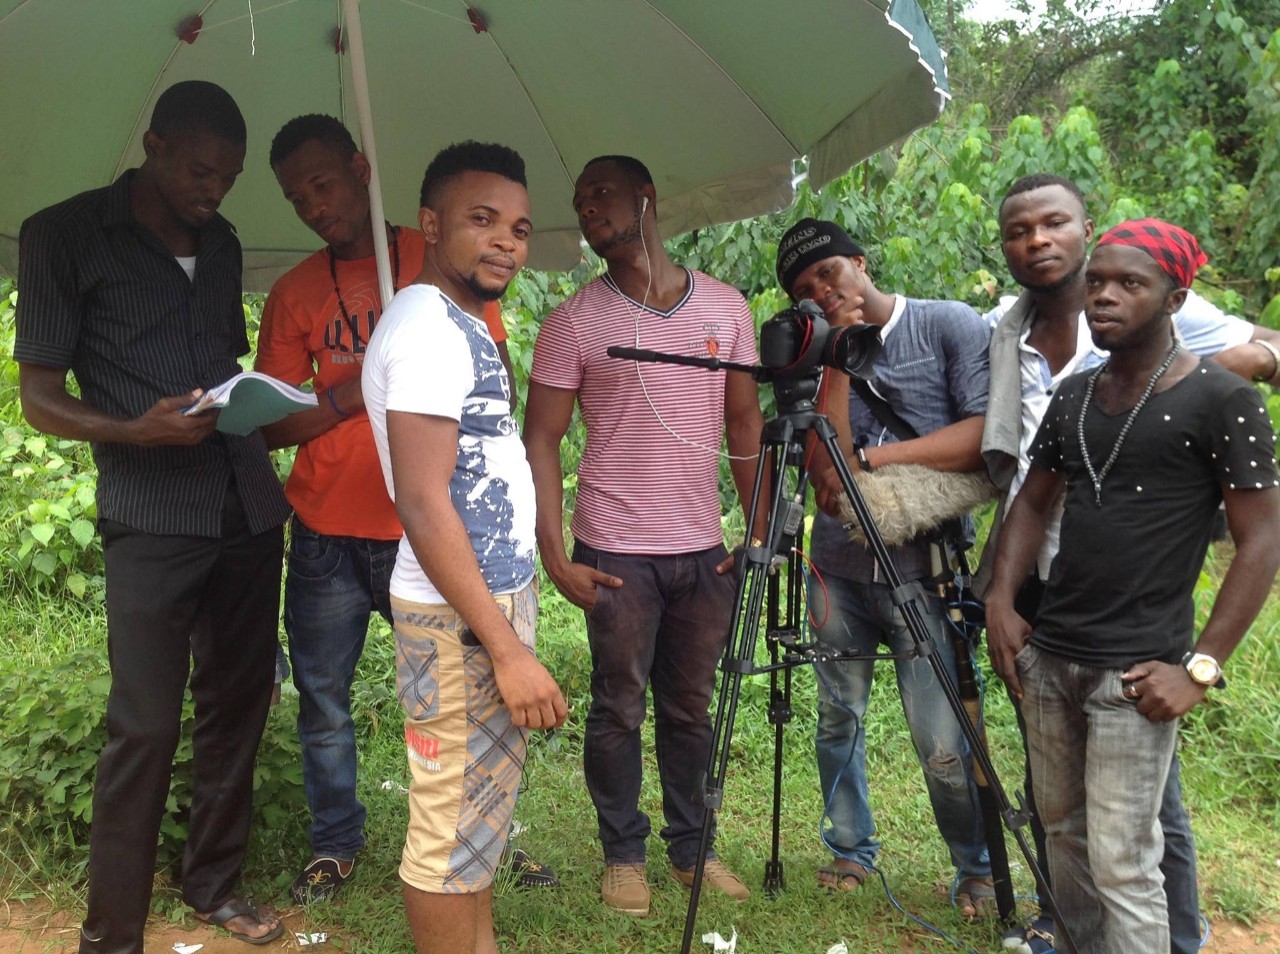 Shooting a Nollywood movie in Awka, Nigeria